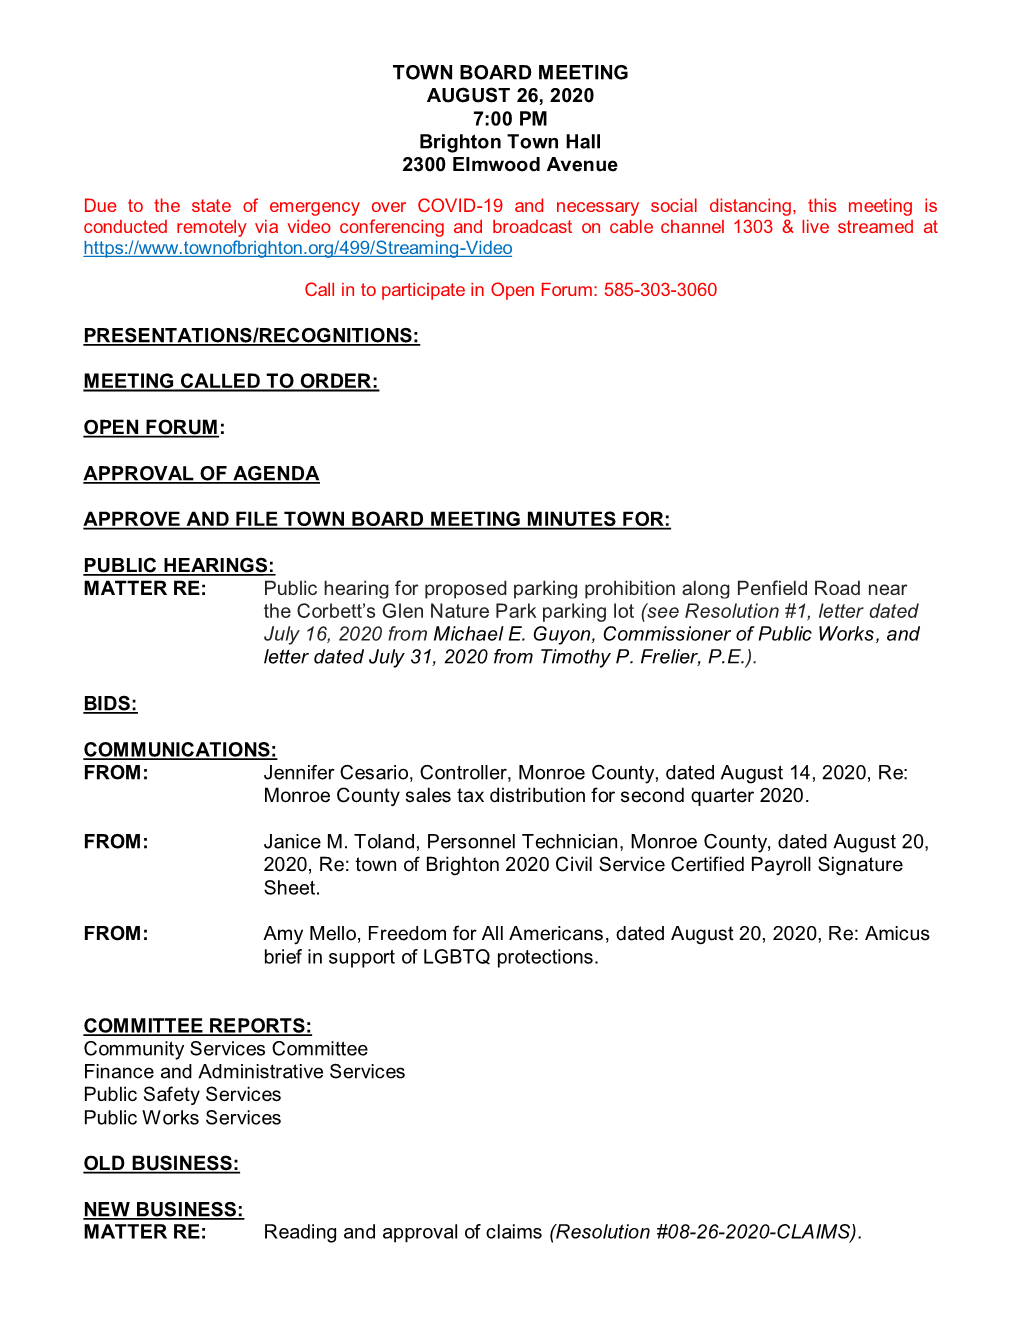 August 26, 2020 Town Board Meeting Agenda